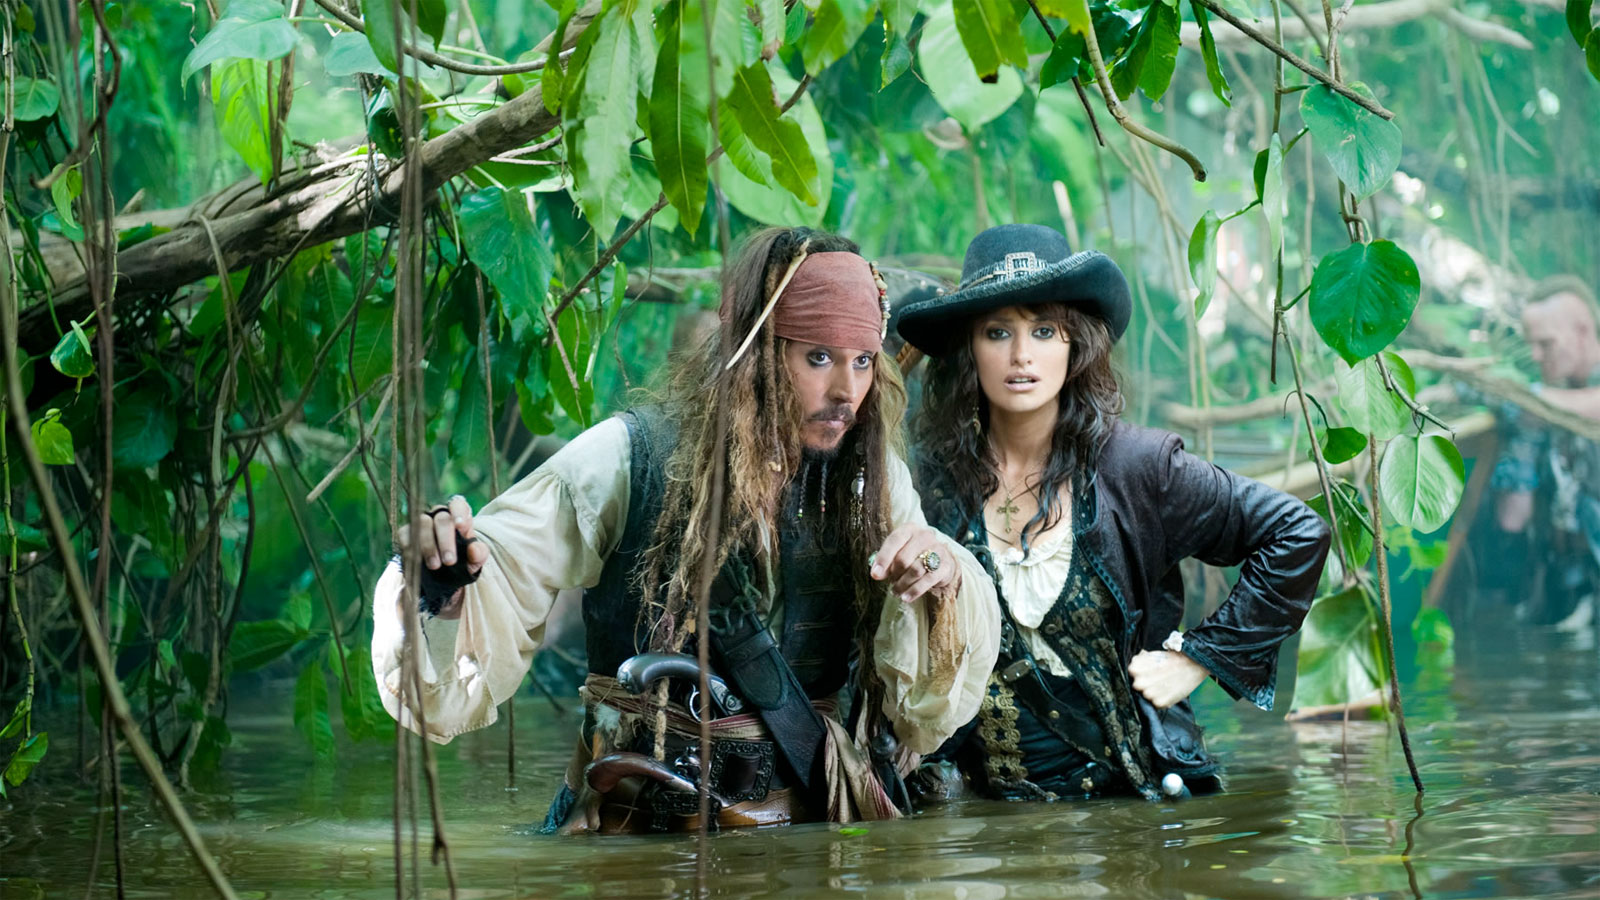 Pirates of the Carribean: On Stranger Tides